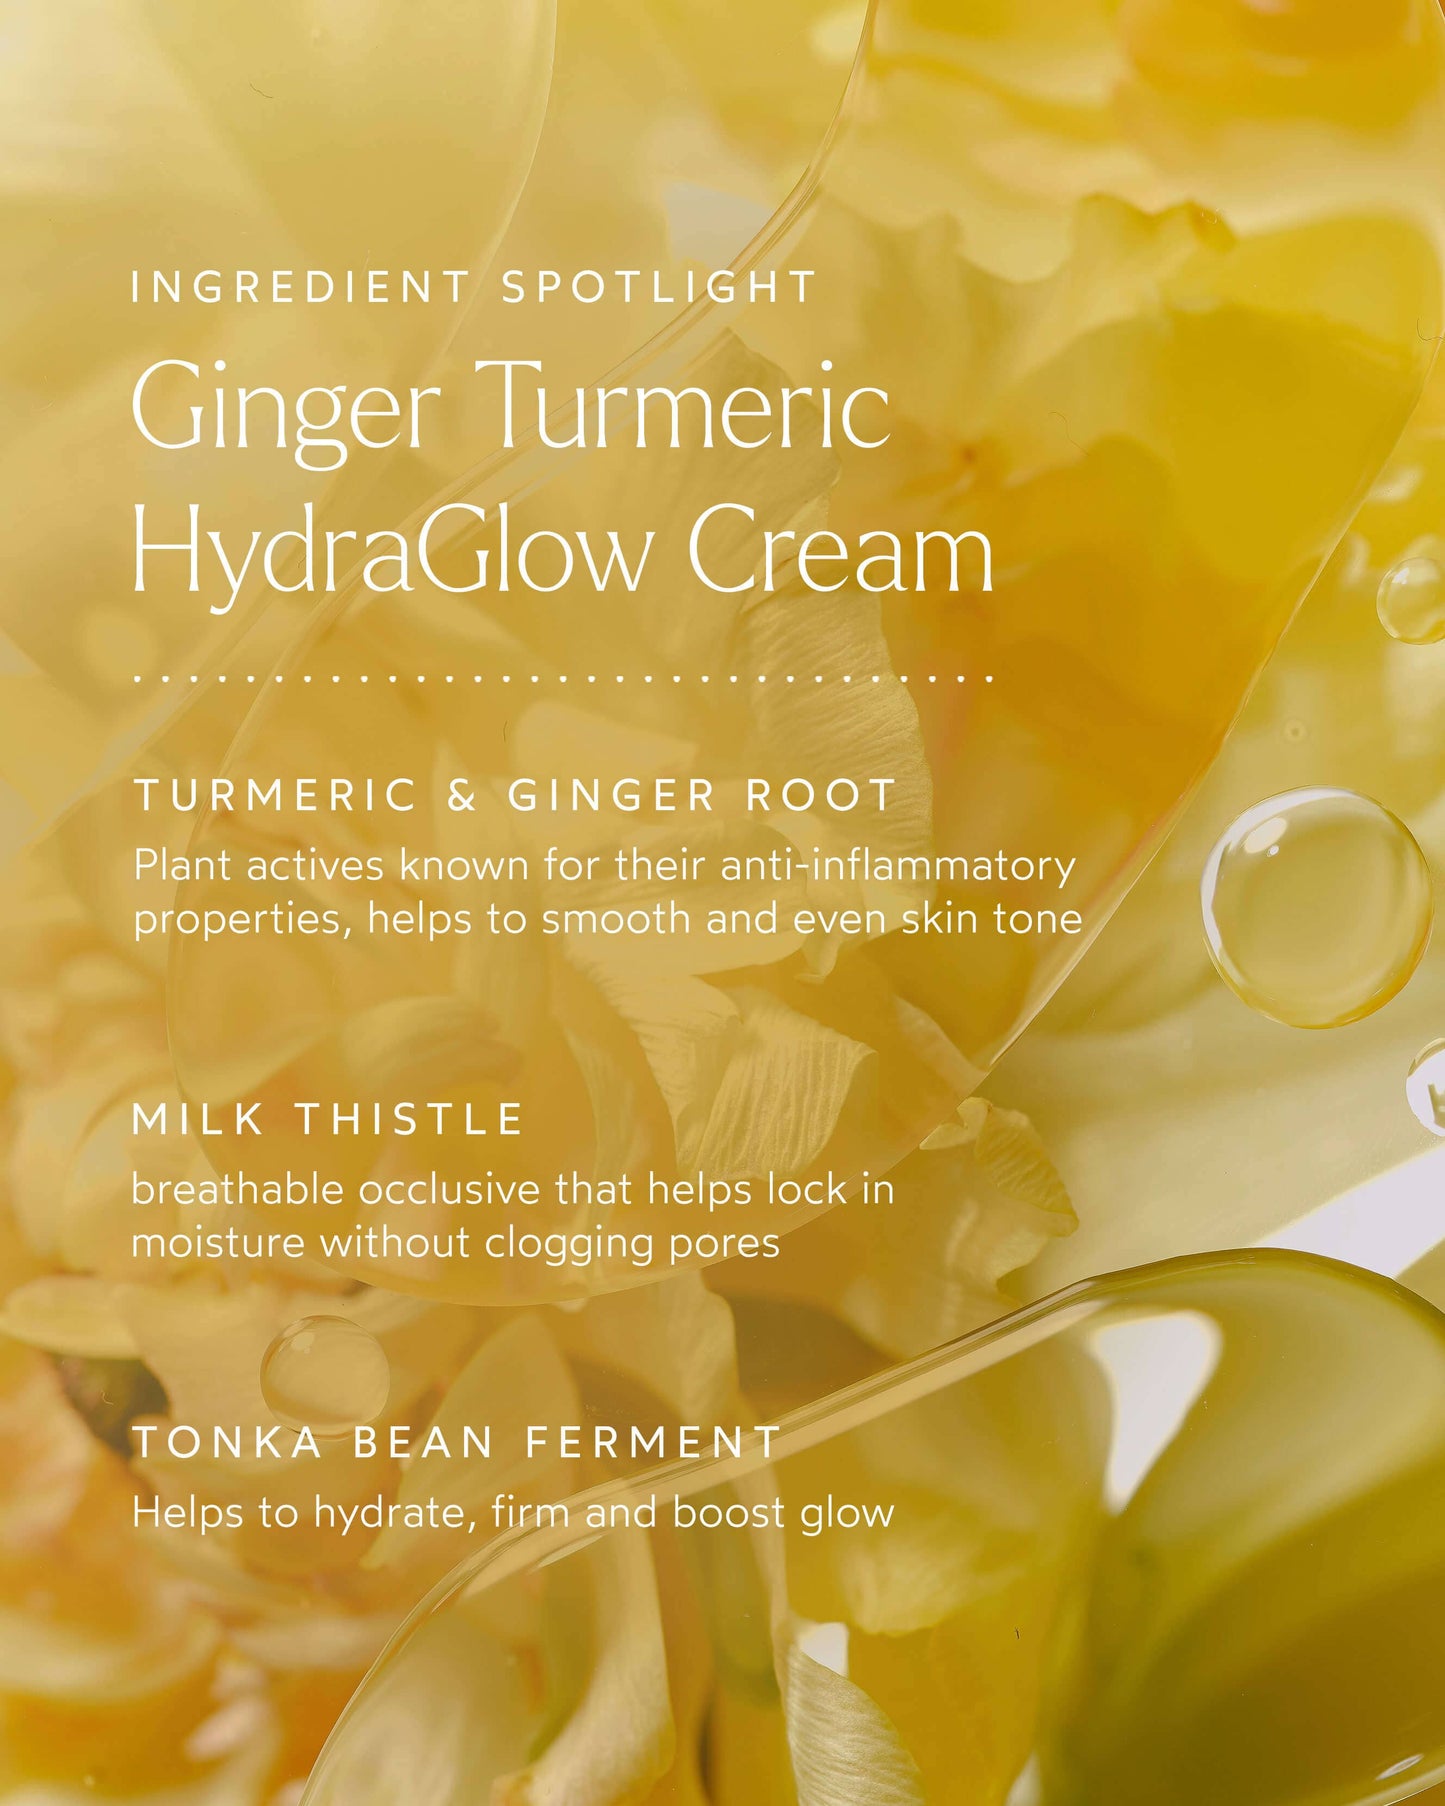 Ginger Turmeric HydraGlow Cream